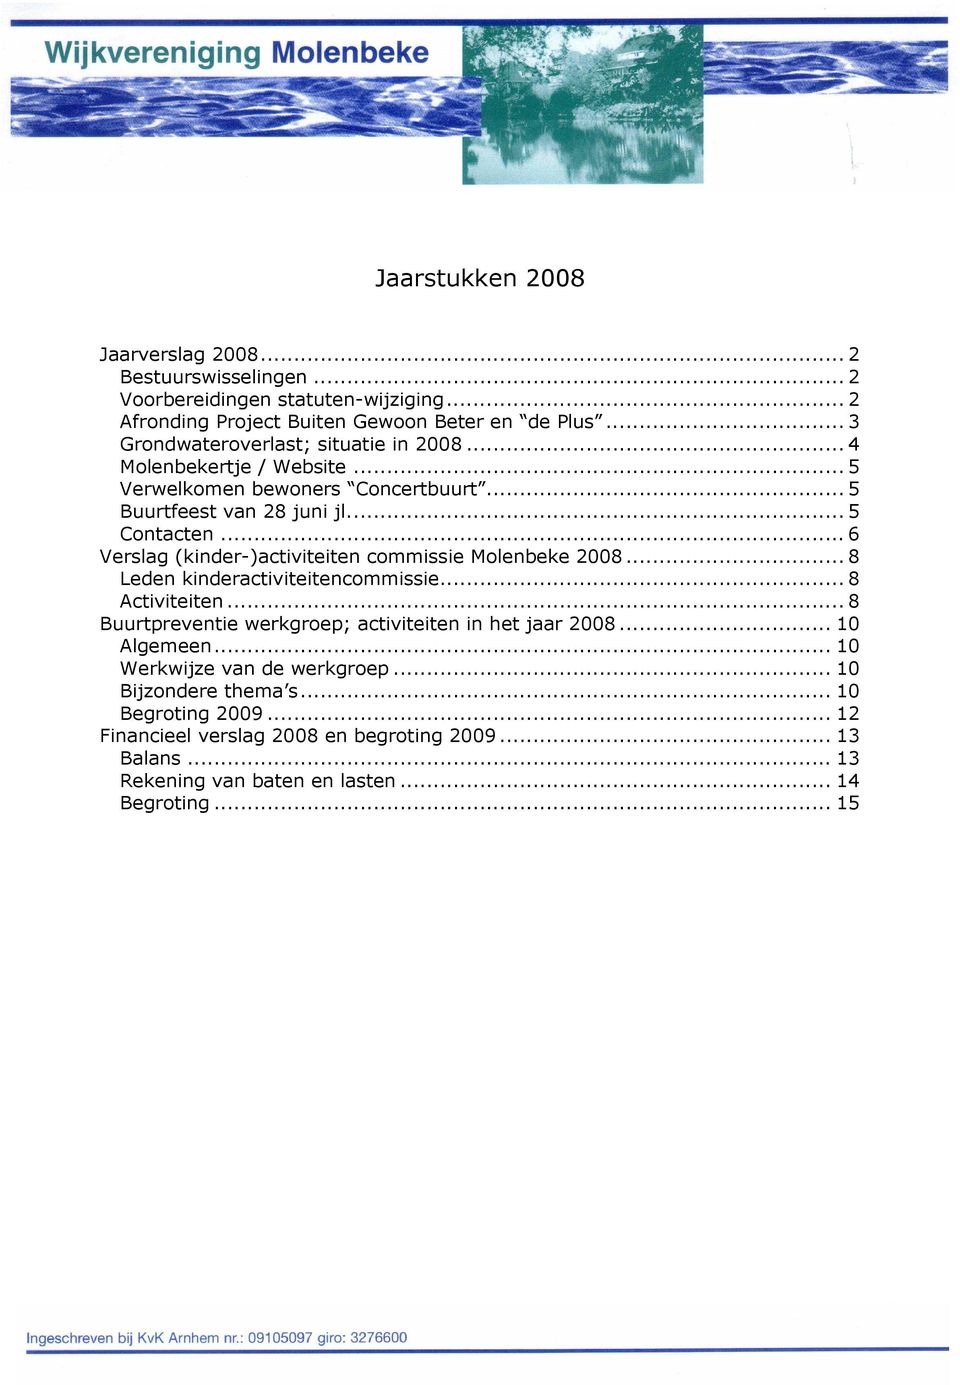 .. 6 Verslag (kinder-)activiteiten commissie Molenbeke 2008... 8 Leden kinderactiviteitencommissie... 8 Activiteiten.